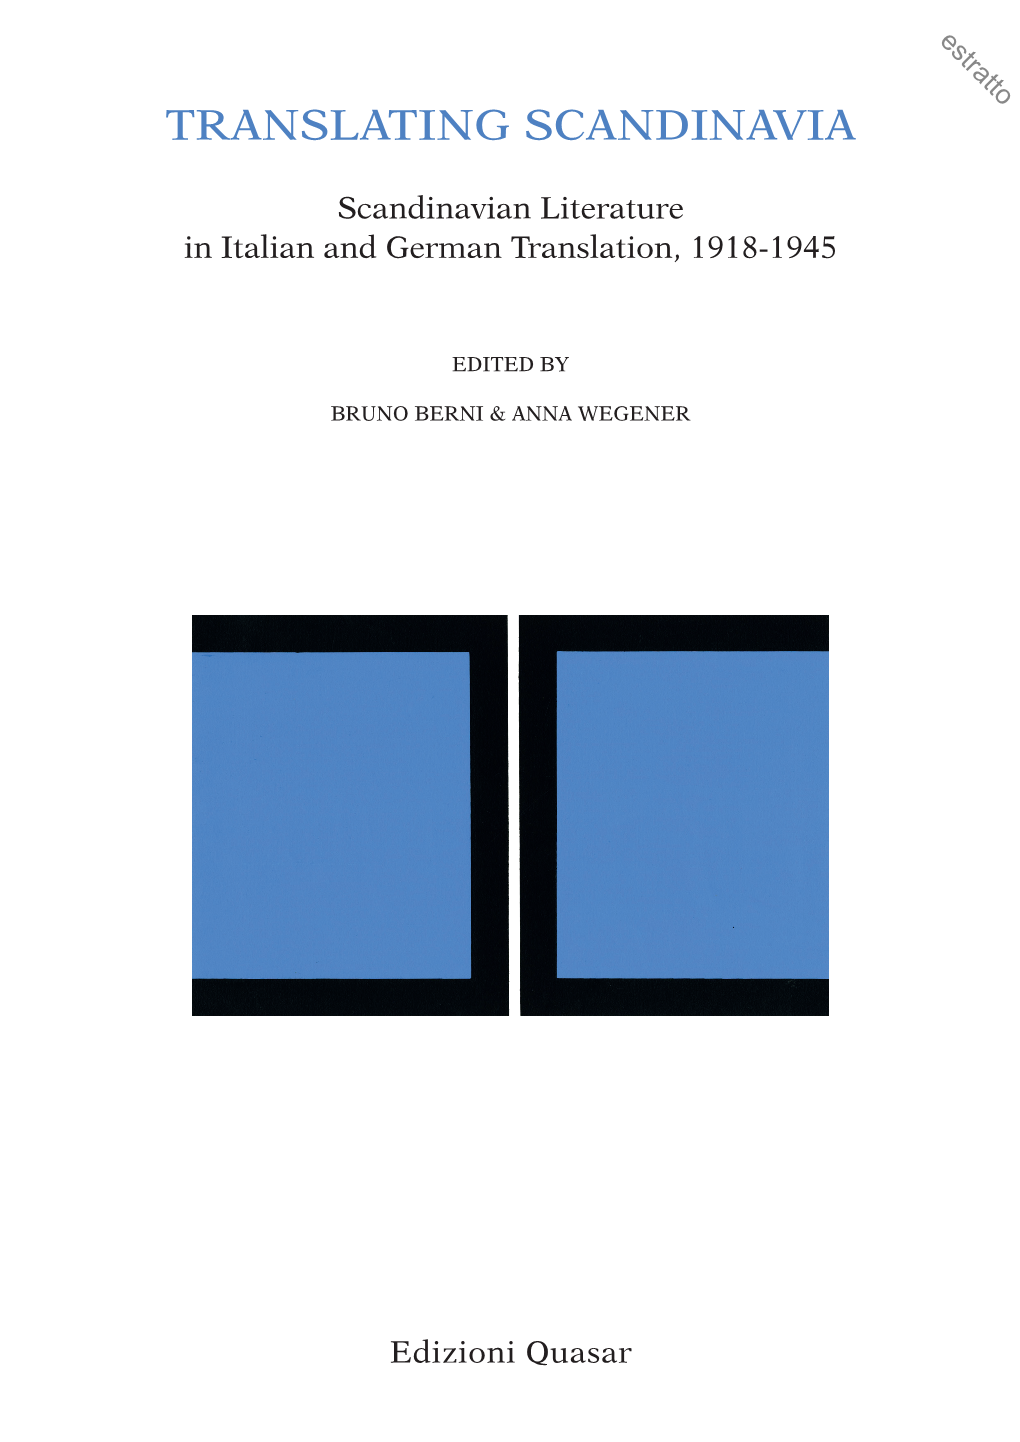 Translating Scandinavia. Scandinavian Literature in Italian